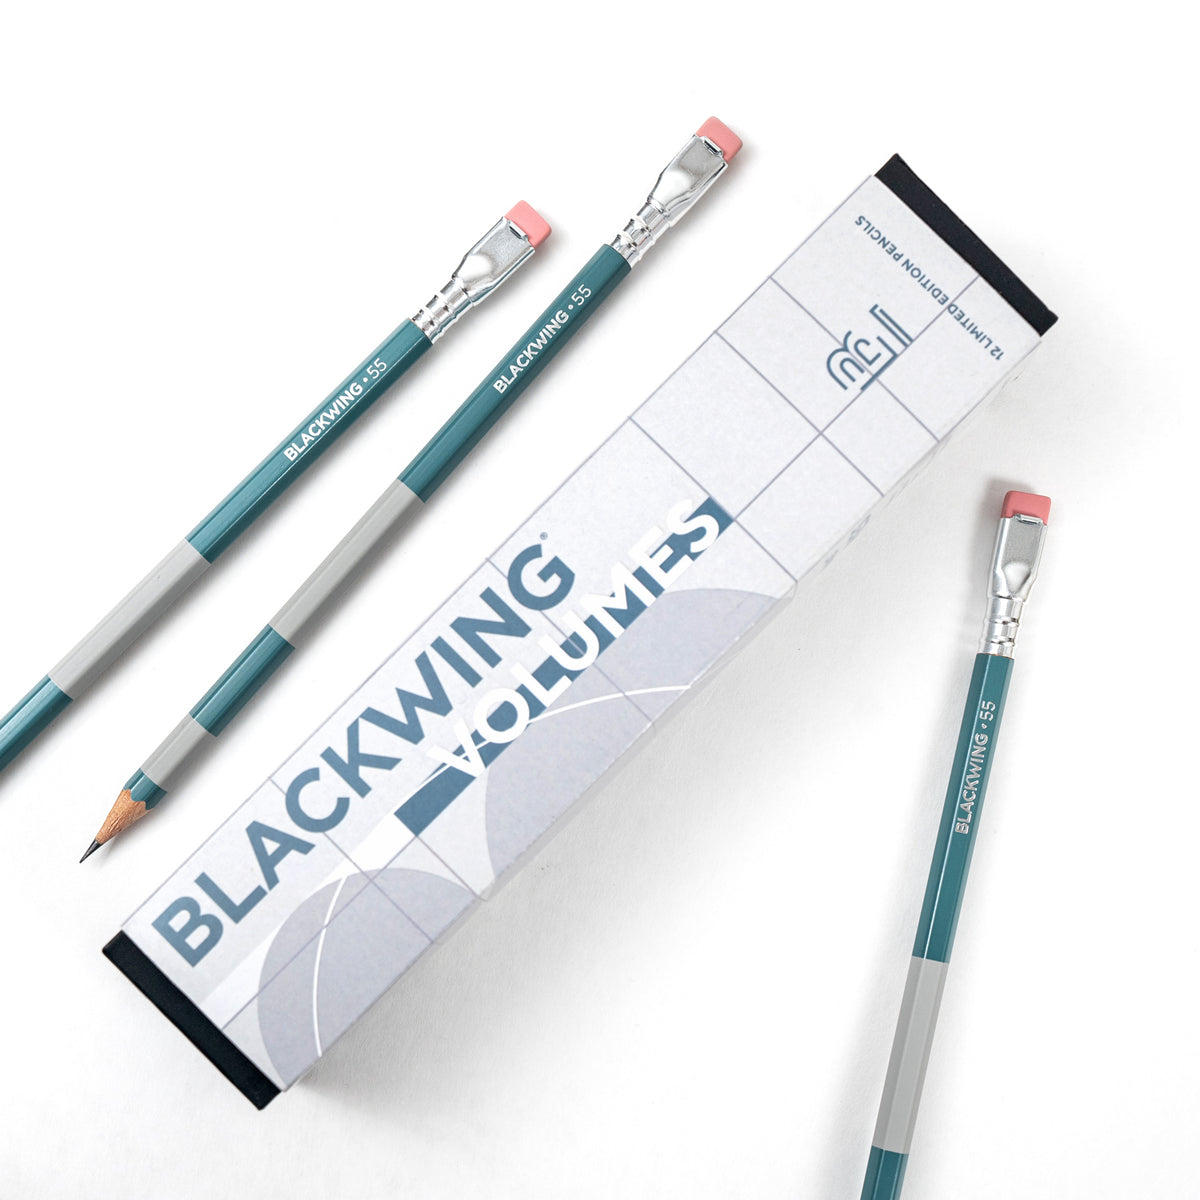 Blackwing Volumes #55 Pencils (Set Of 12) The Golden Ratio, 41% OFF